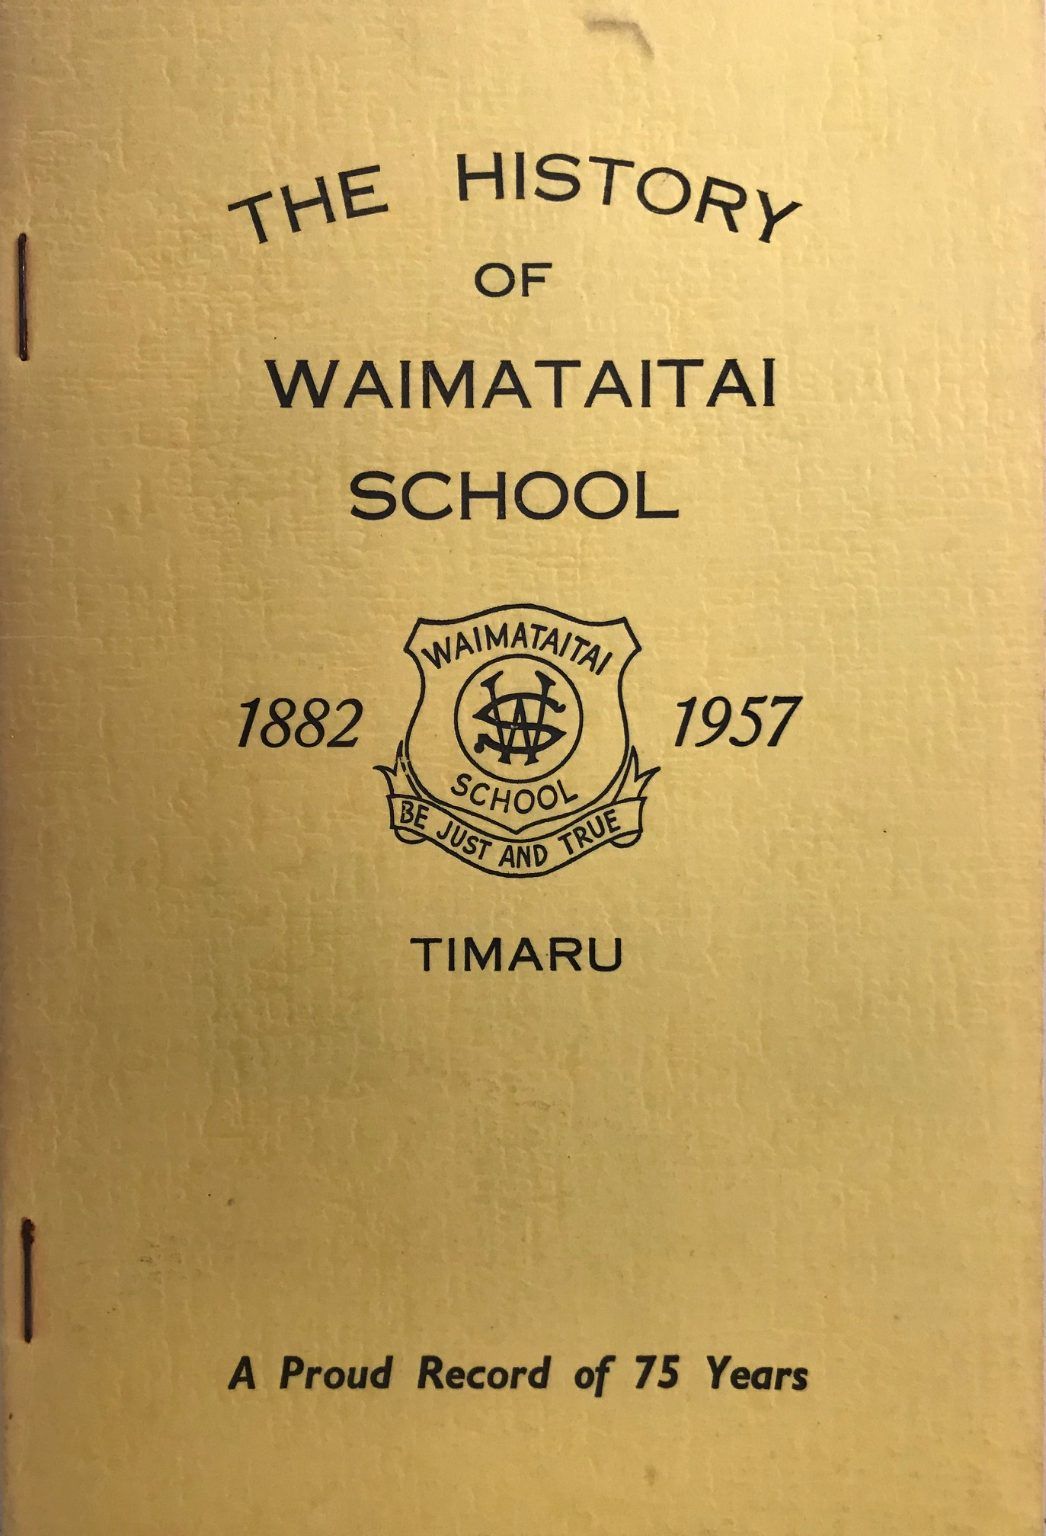 THE HISTORY OF WAIMATAITAI SCHOOL Timaru 1882-1957: A Proud History of 75 Years